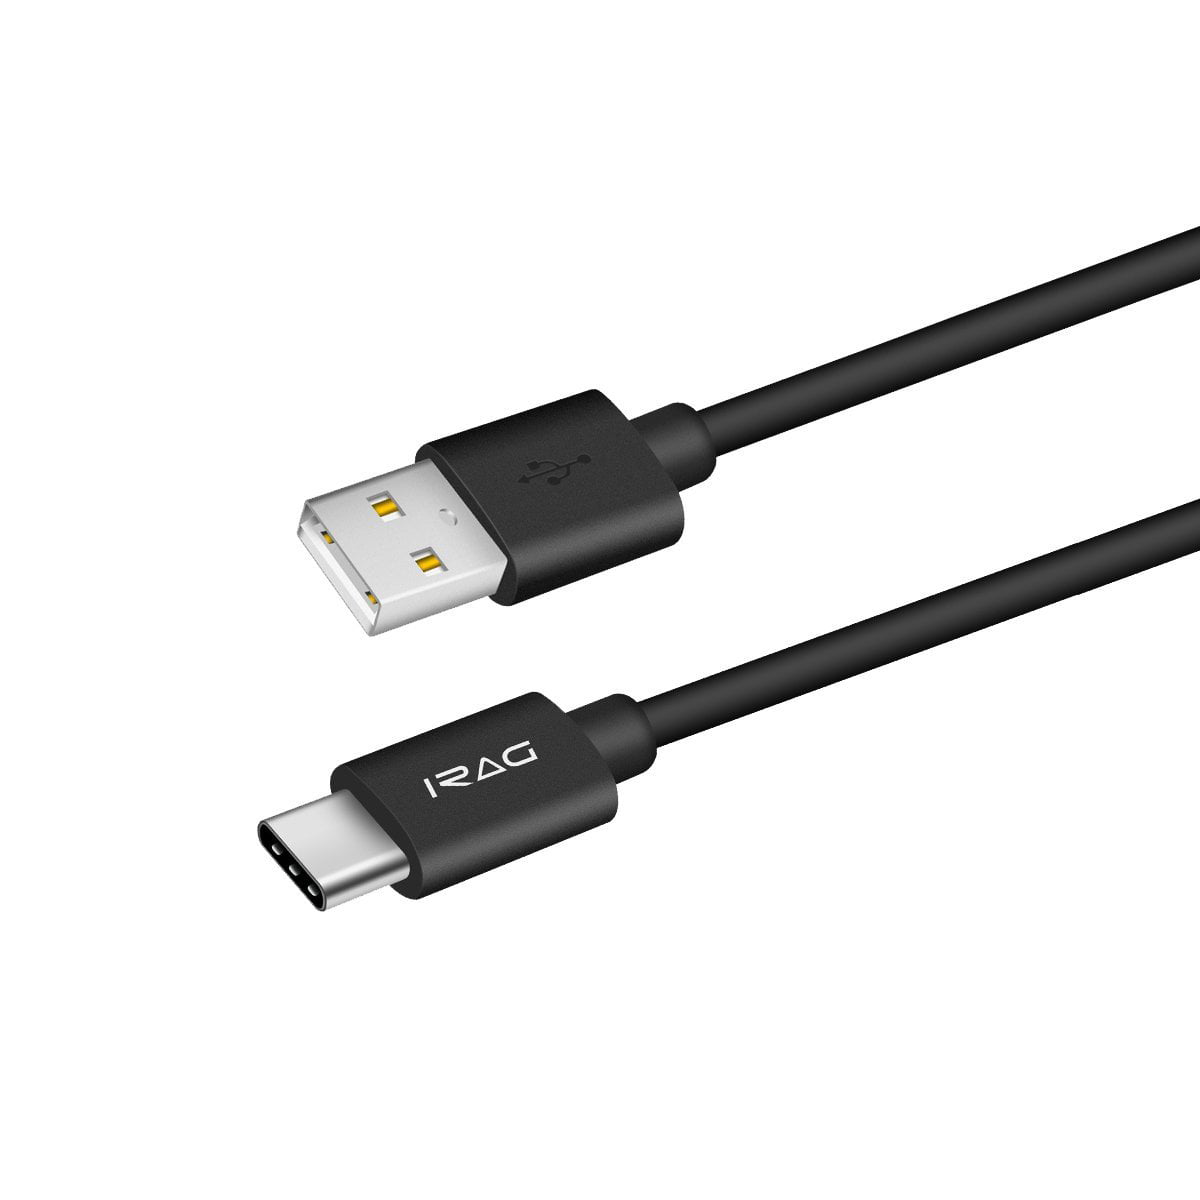 Lg usb c. LG g6 USB Connector. Isble Cable LG.